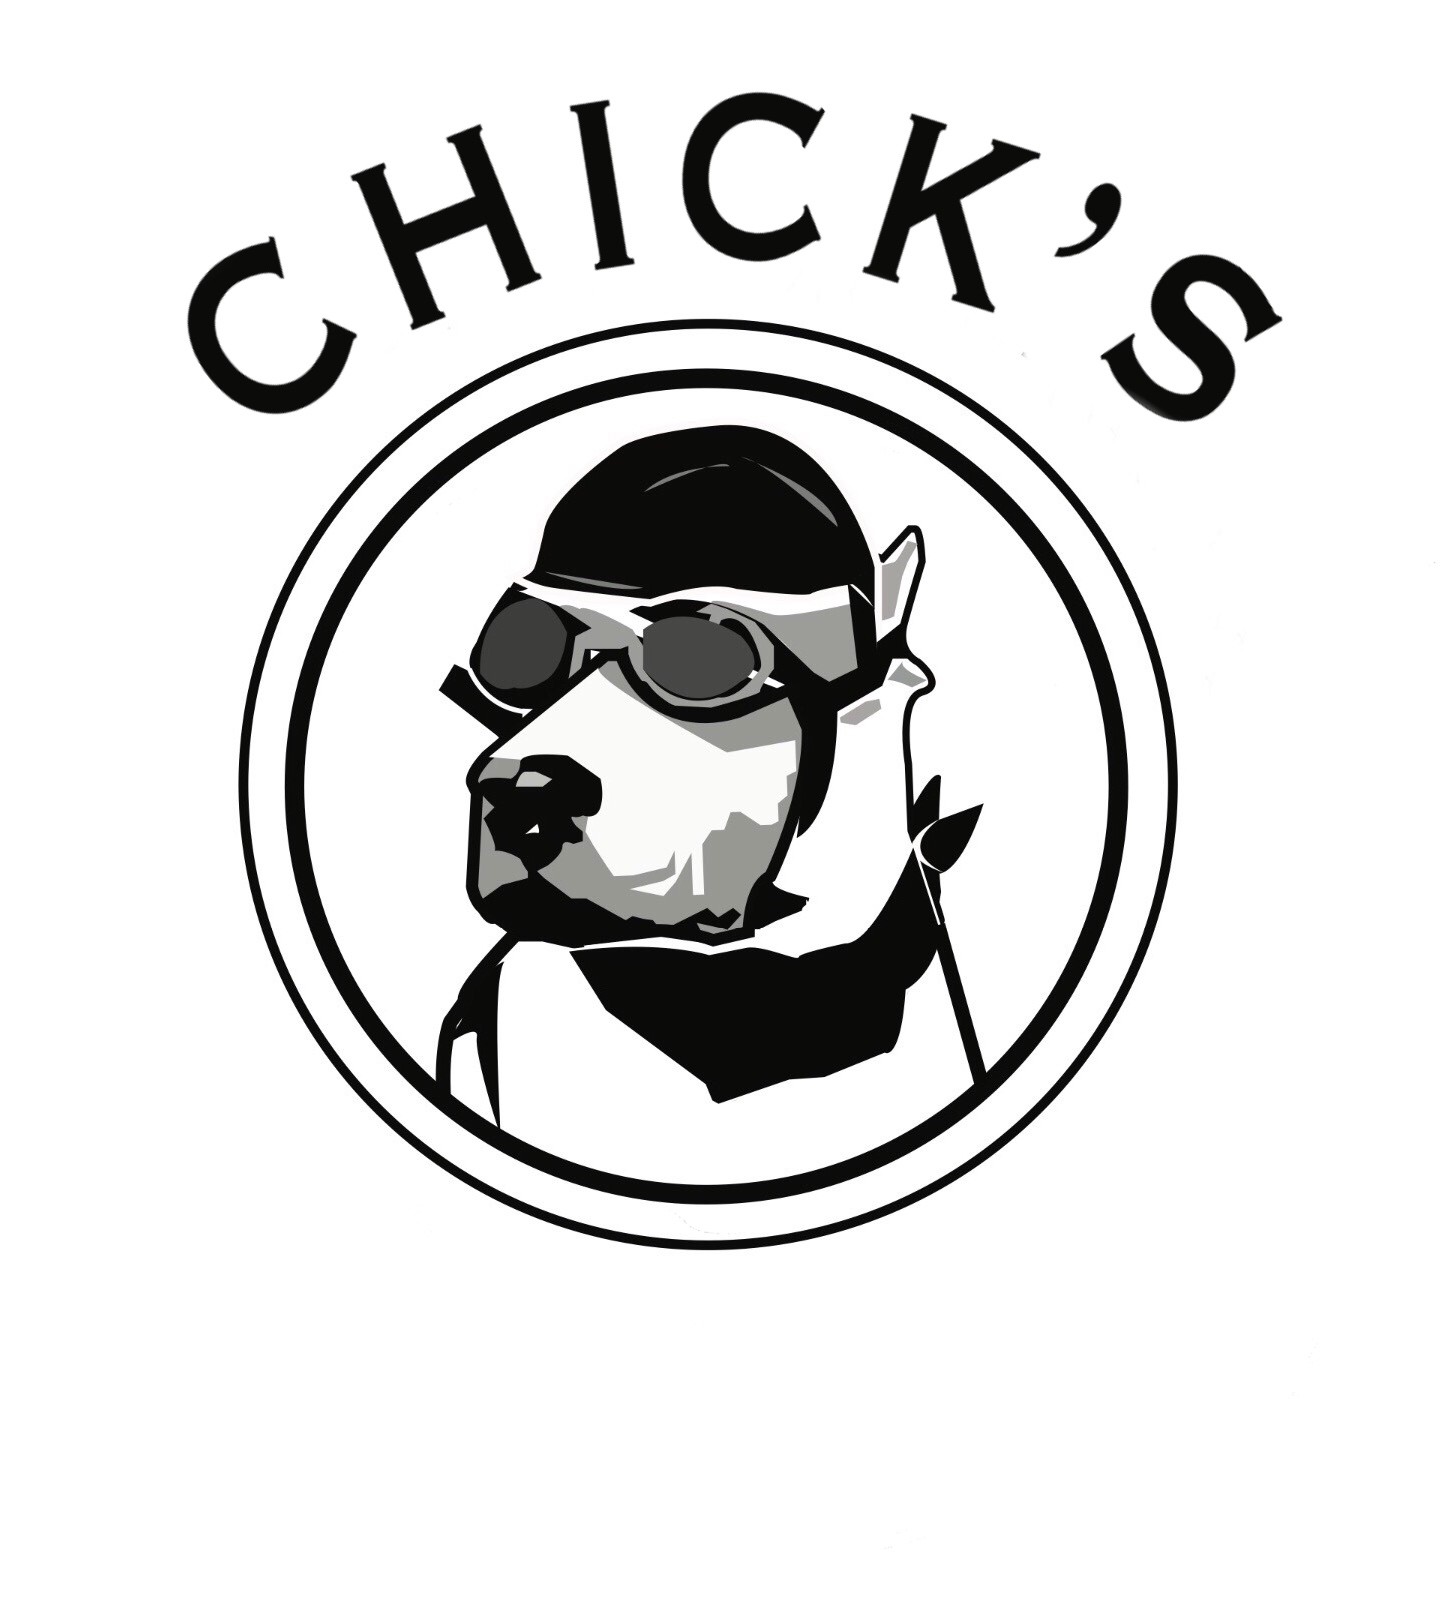 Chick's